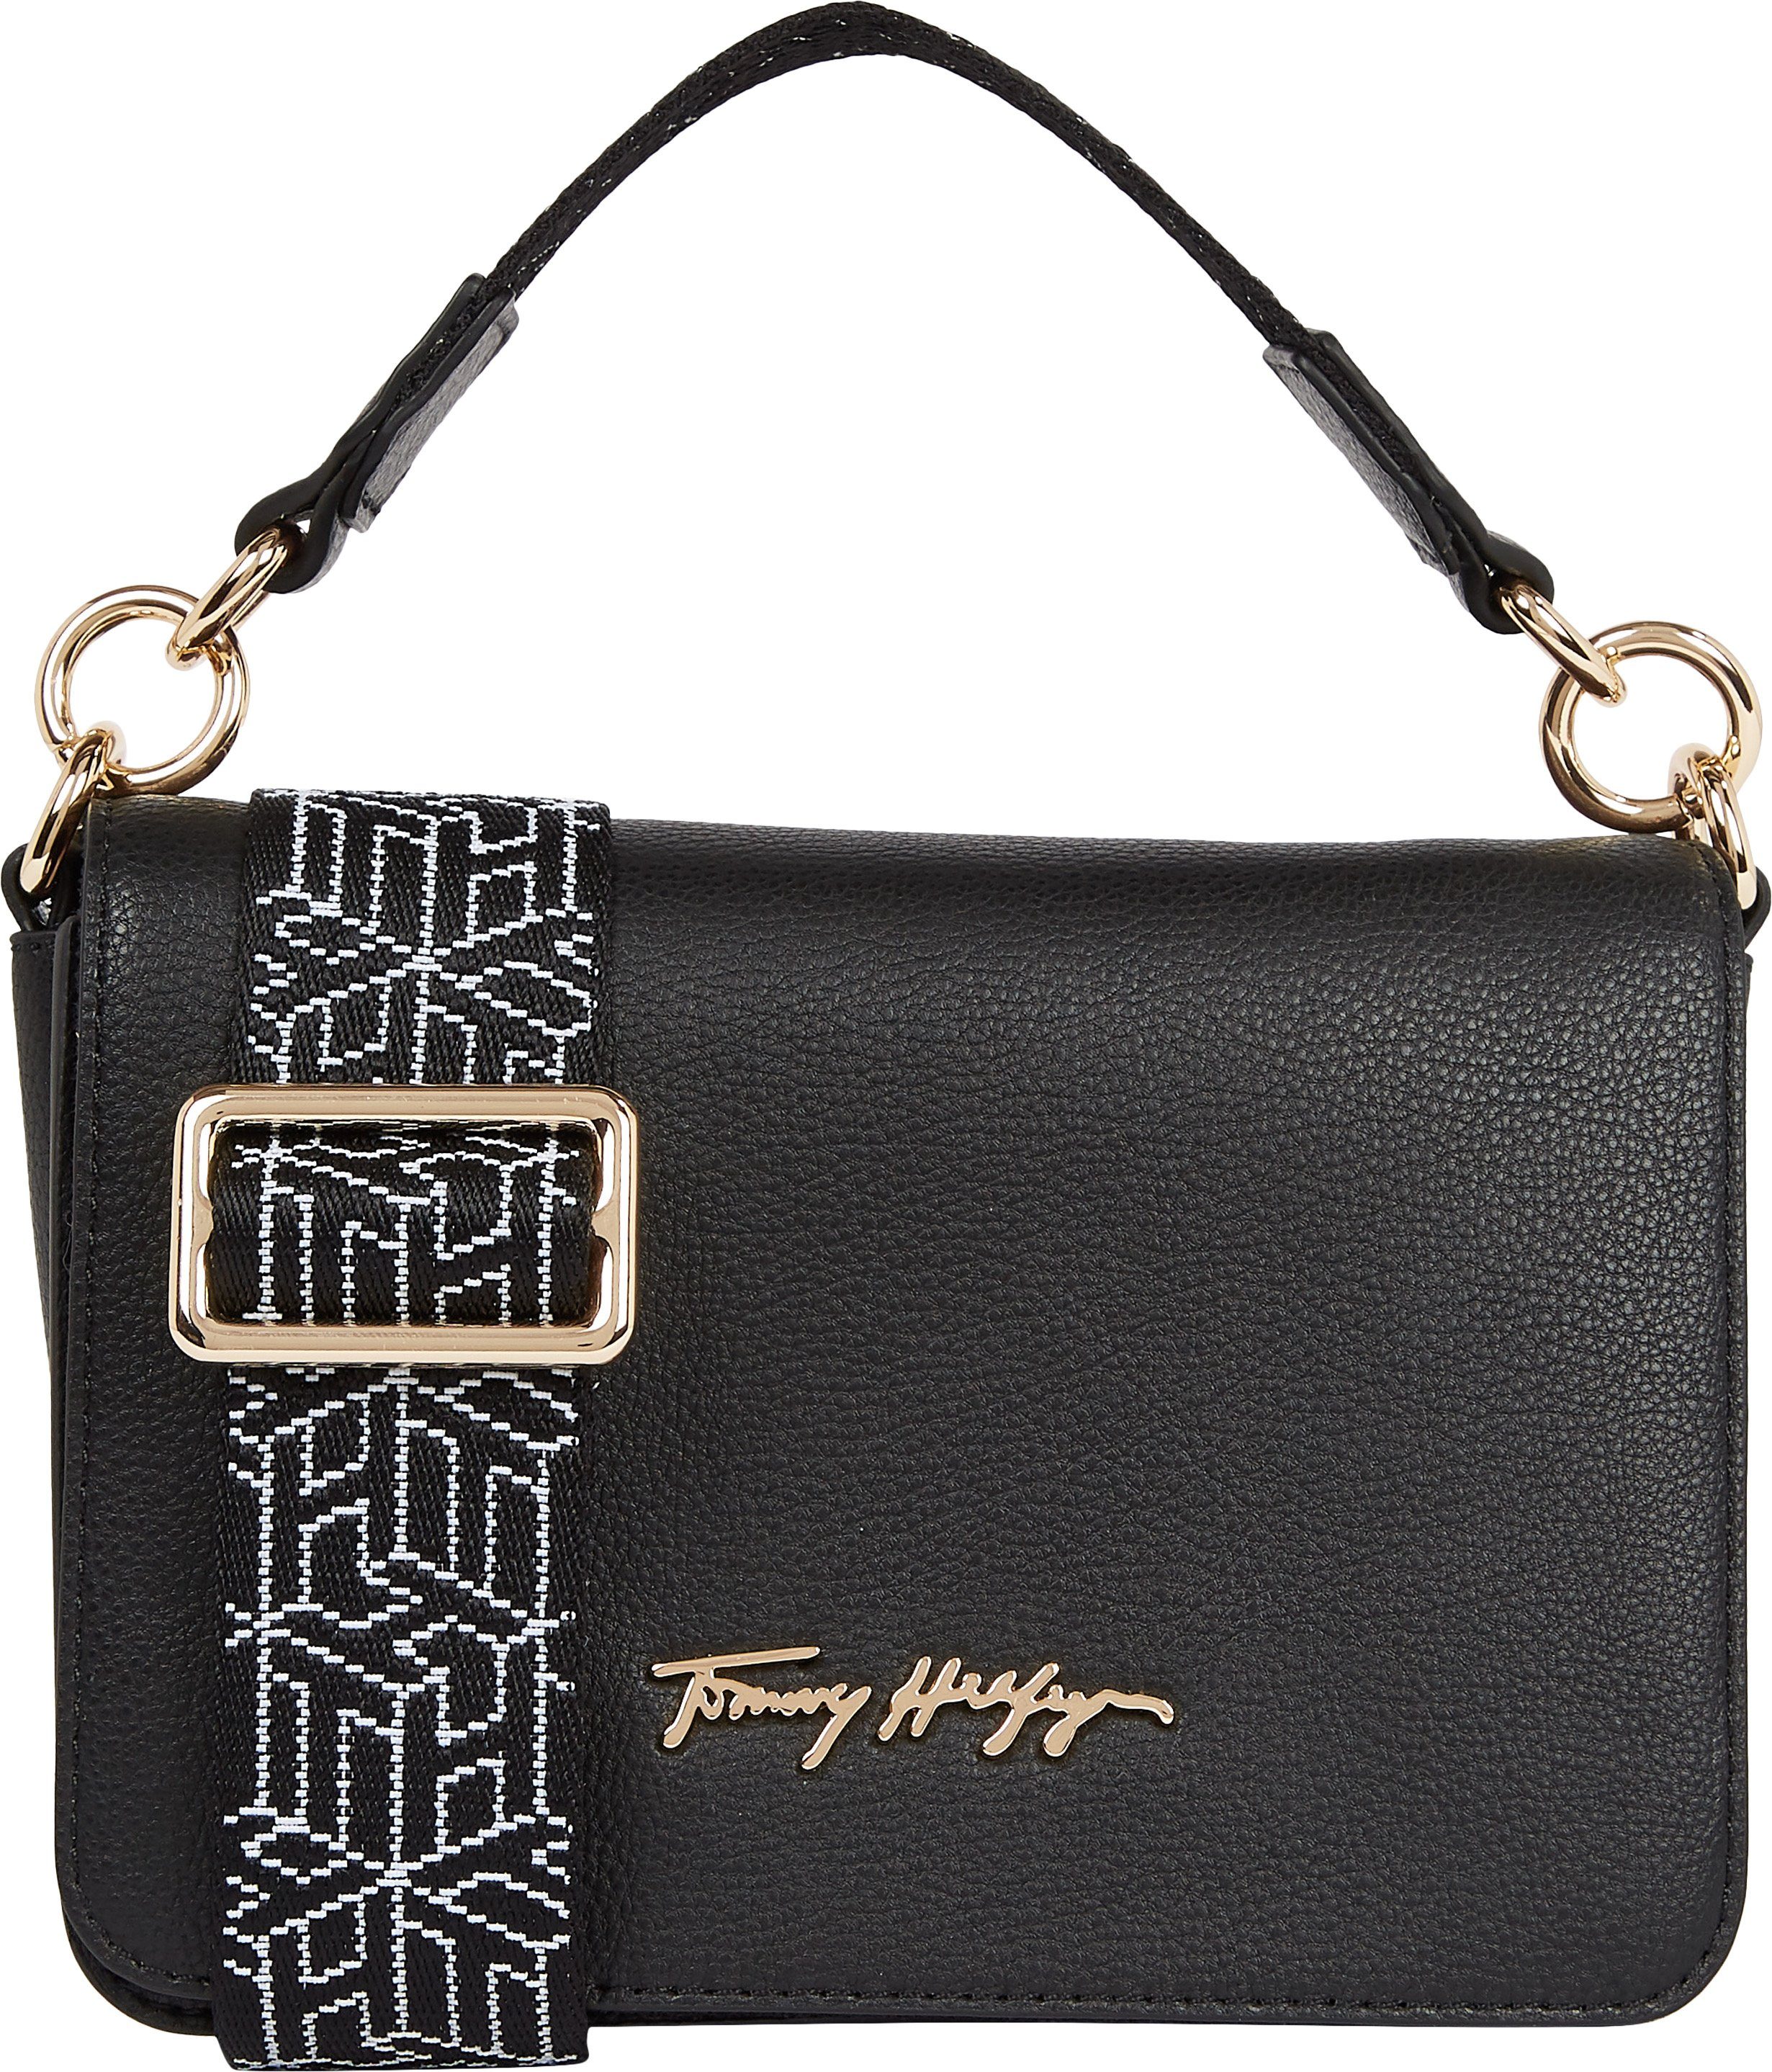 Tommy Hilfiger Mini Bag »TOMMY JOY MINI CROSSOVER«, mit goldfarbenen  Details online kaufen | OTTO